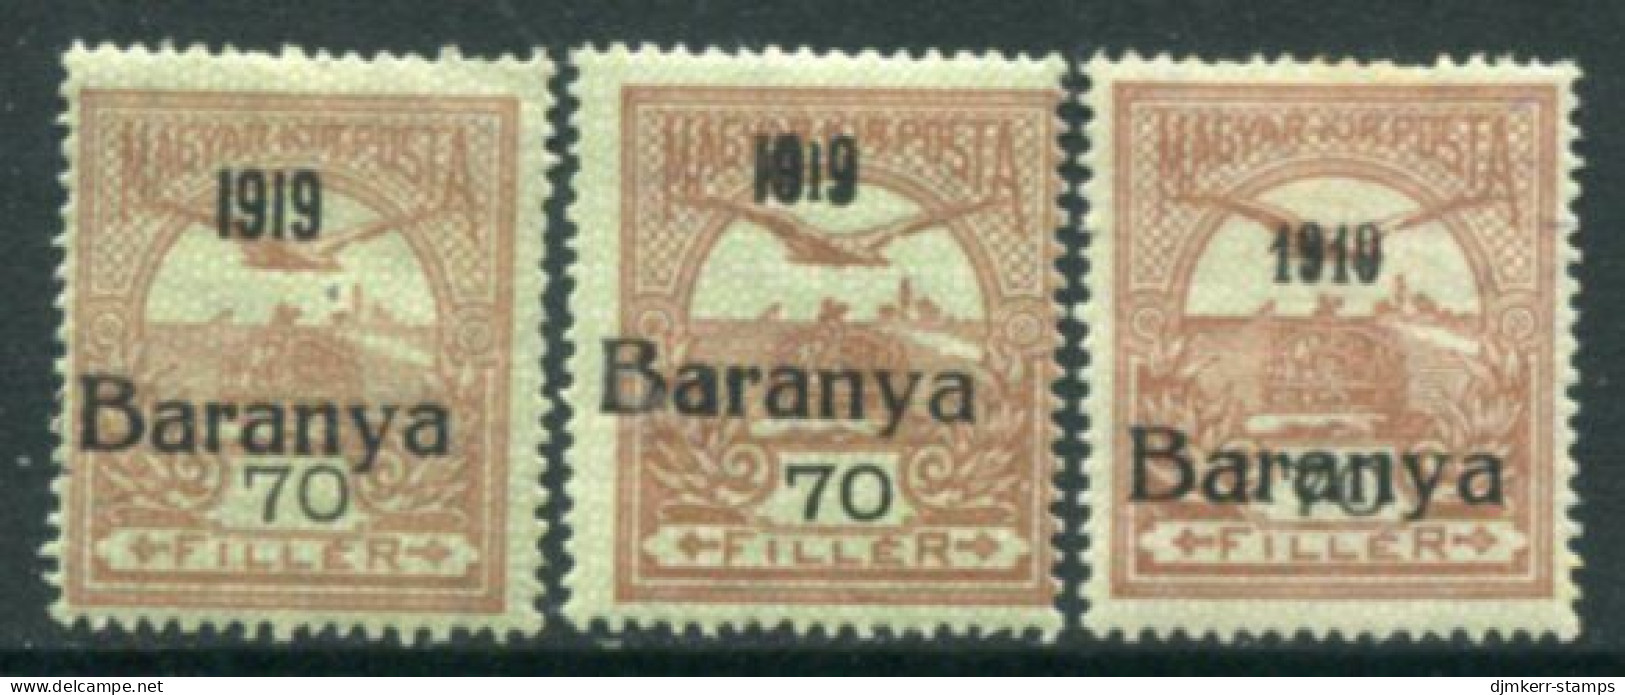 BARANYA Serb Occ. 1919 Turul 70f Three Types Of Date LHM / *.  Michel 14, SG4, 4b + 1 - Baranya